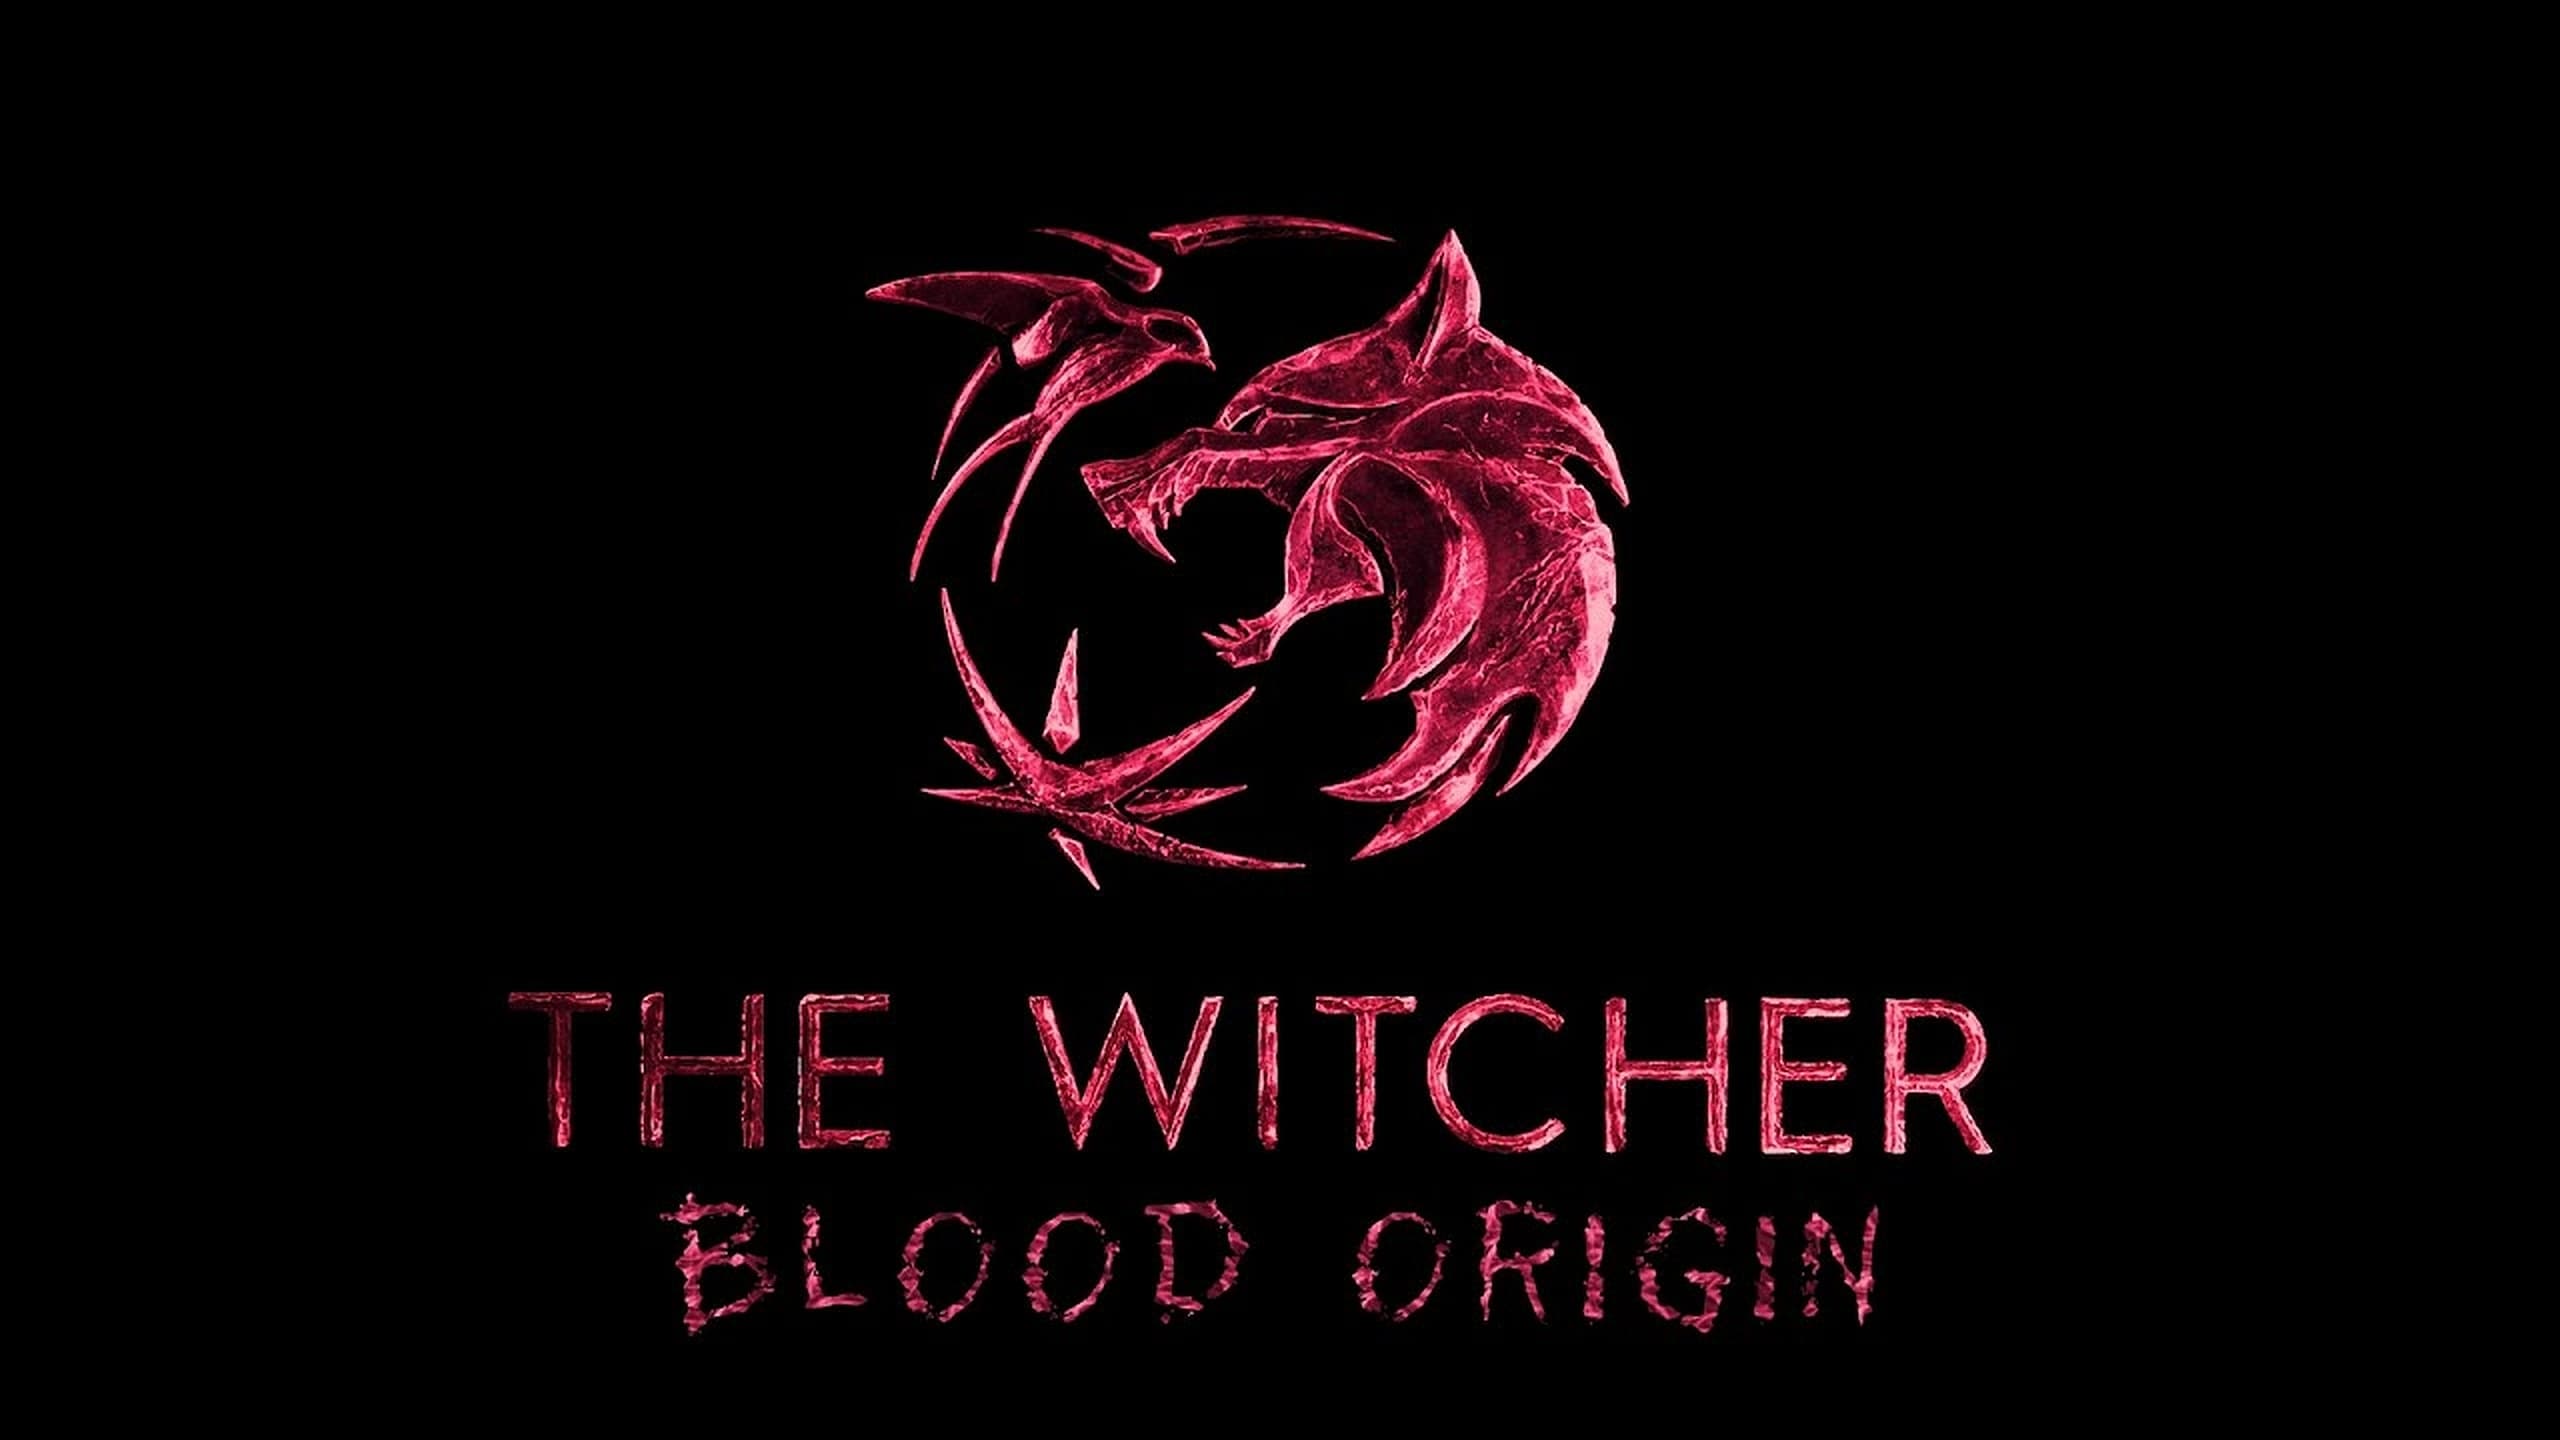 The witcher season 3 soundtrack фото 29